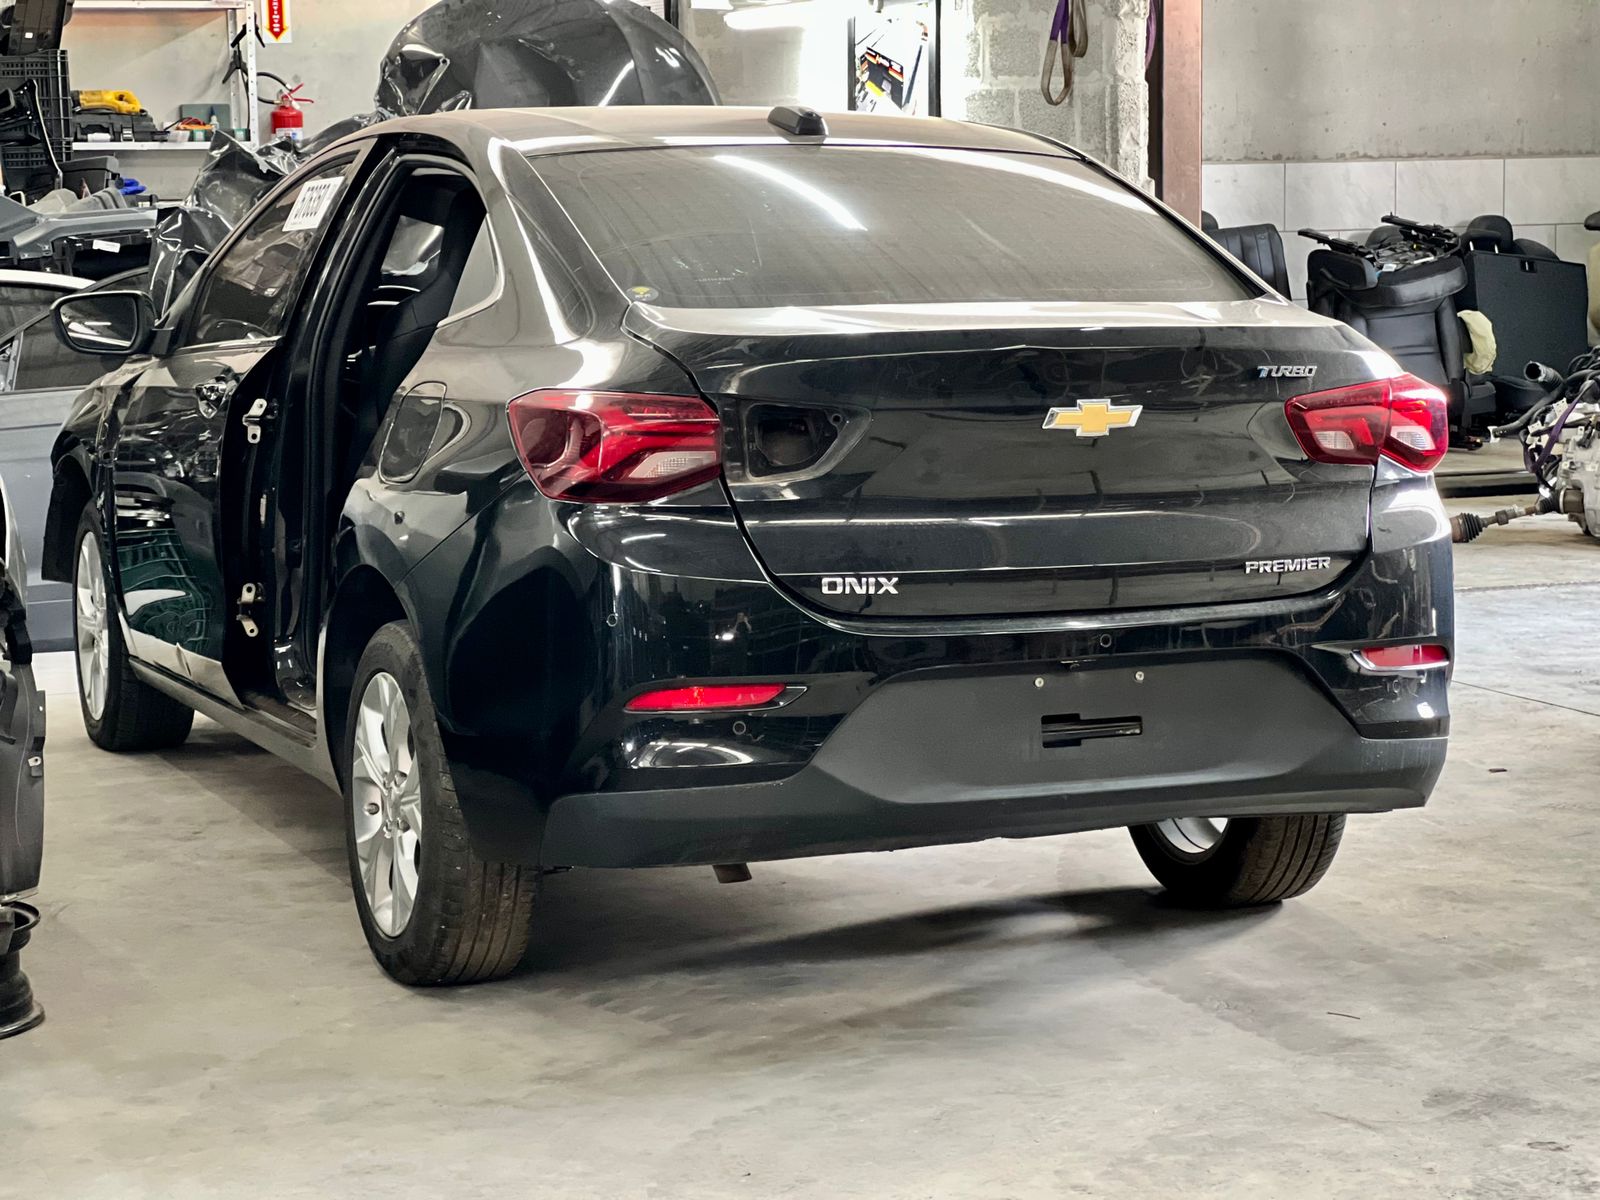 Chevrolet Onix Plus Premier 2021: sedã justifica a liderança no segmento